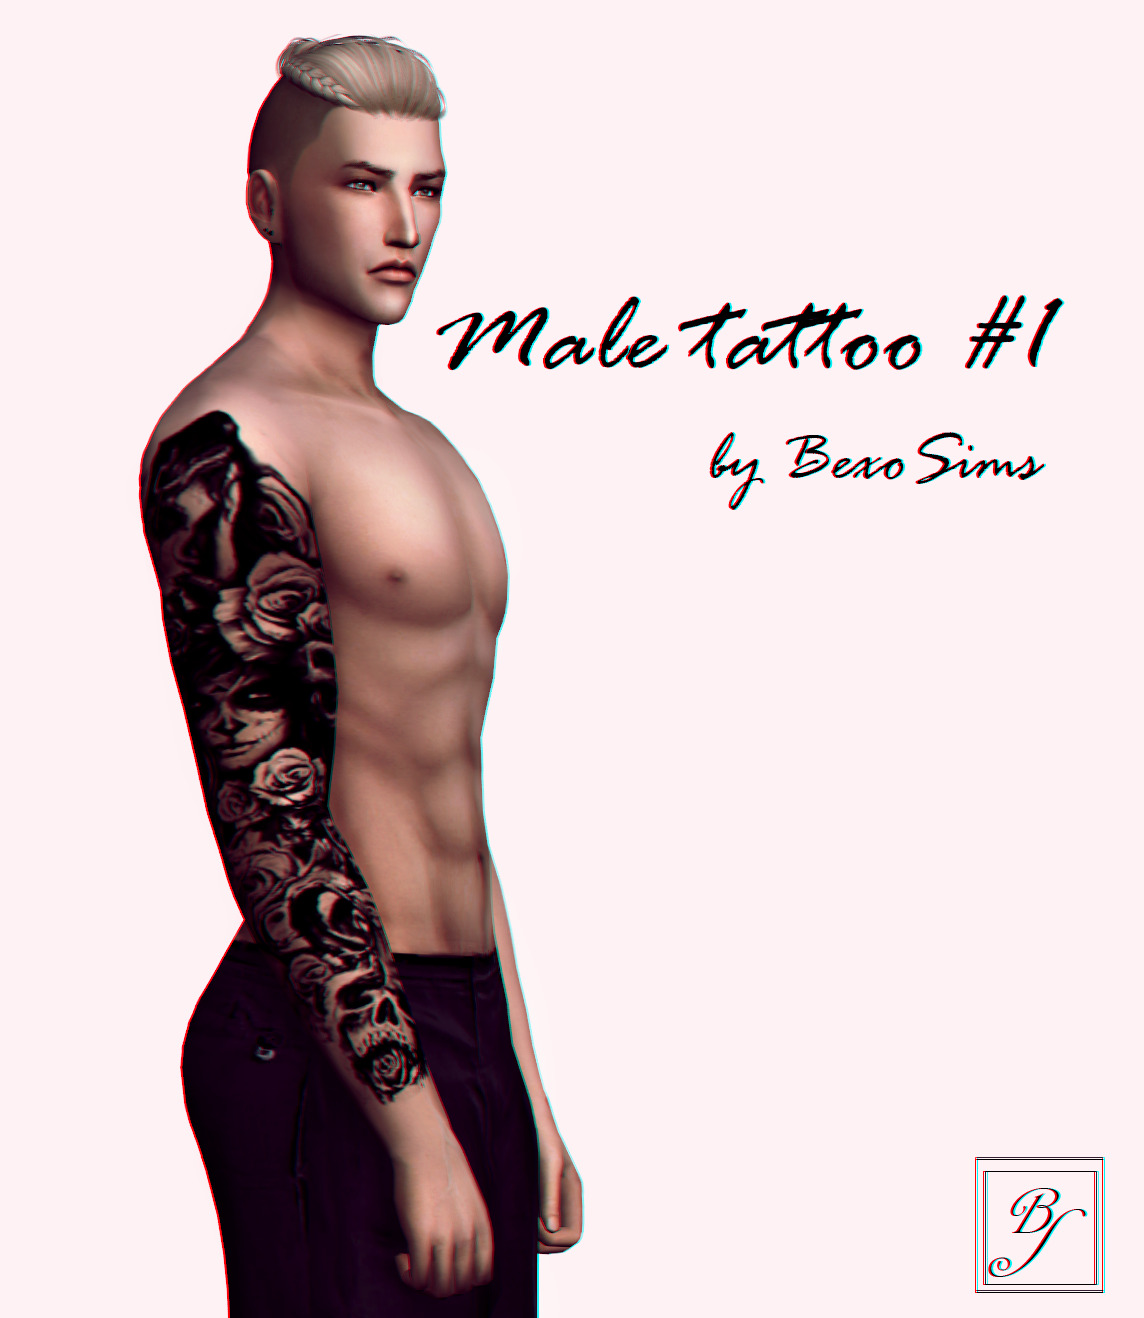 the sims 3 cc sleeve tattoos